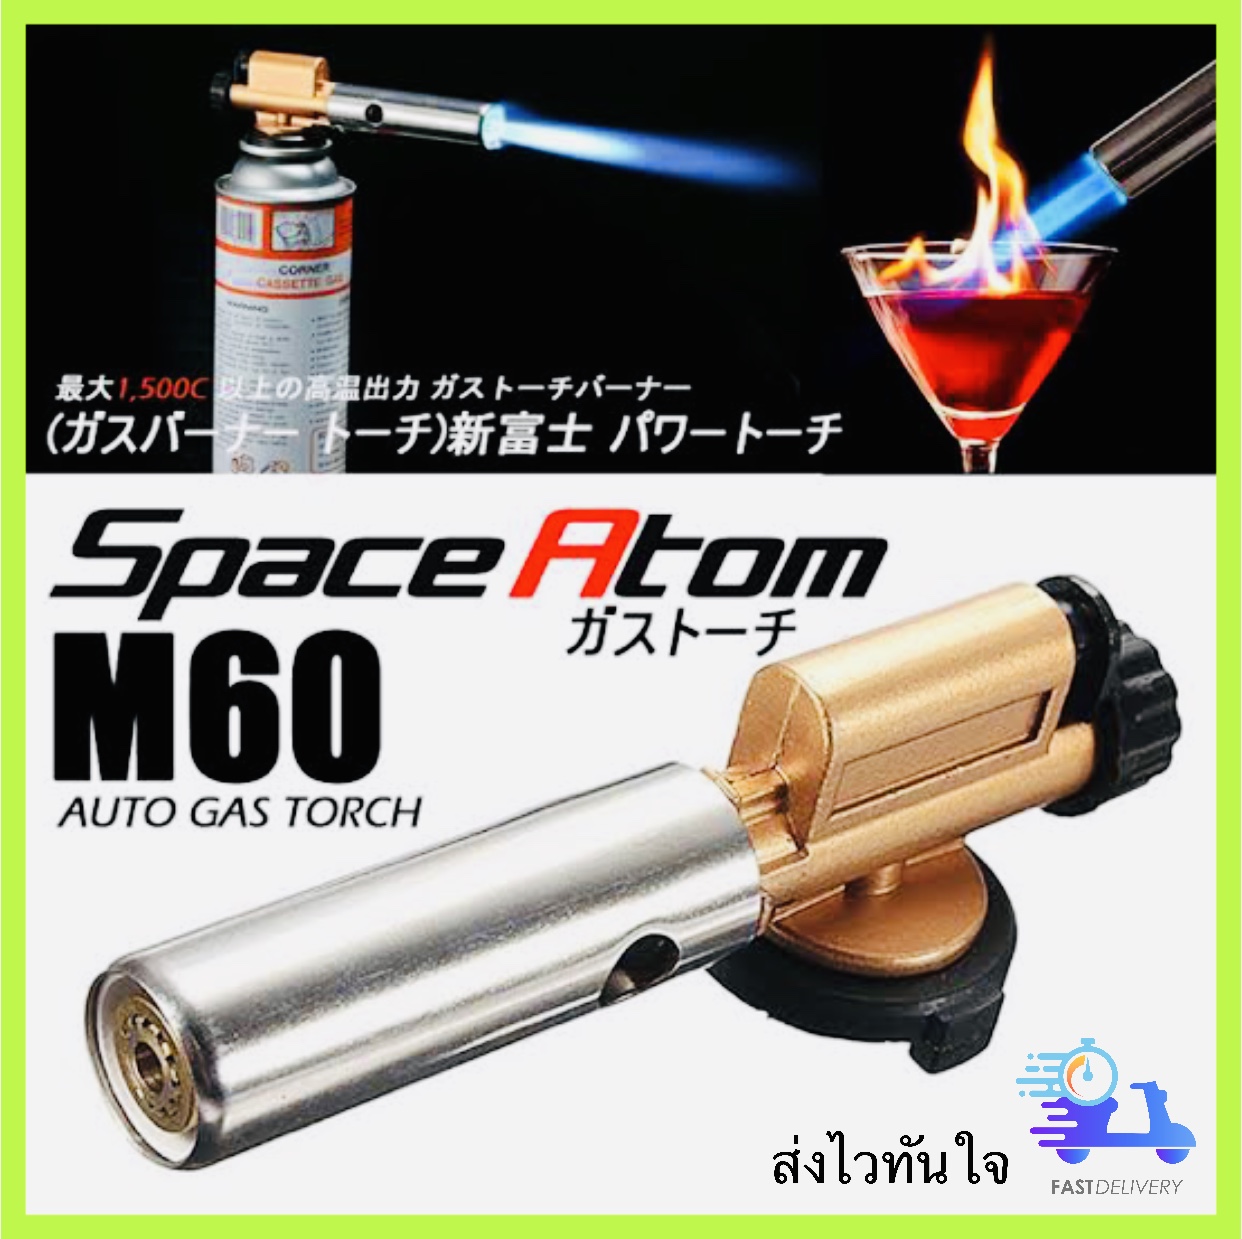 Space atom หัวพ่นแก๊ส หัวพ่นไฟ มีหัวจุดในตัว รุ่น M60